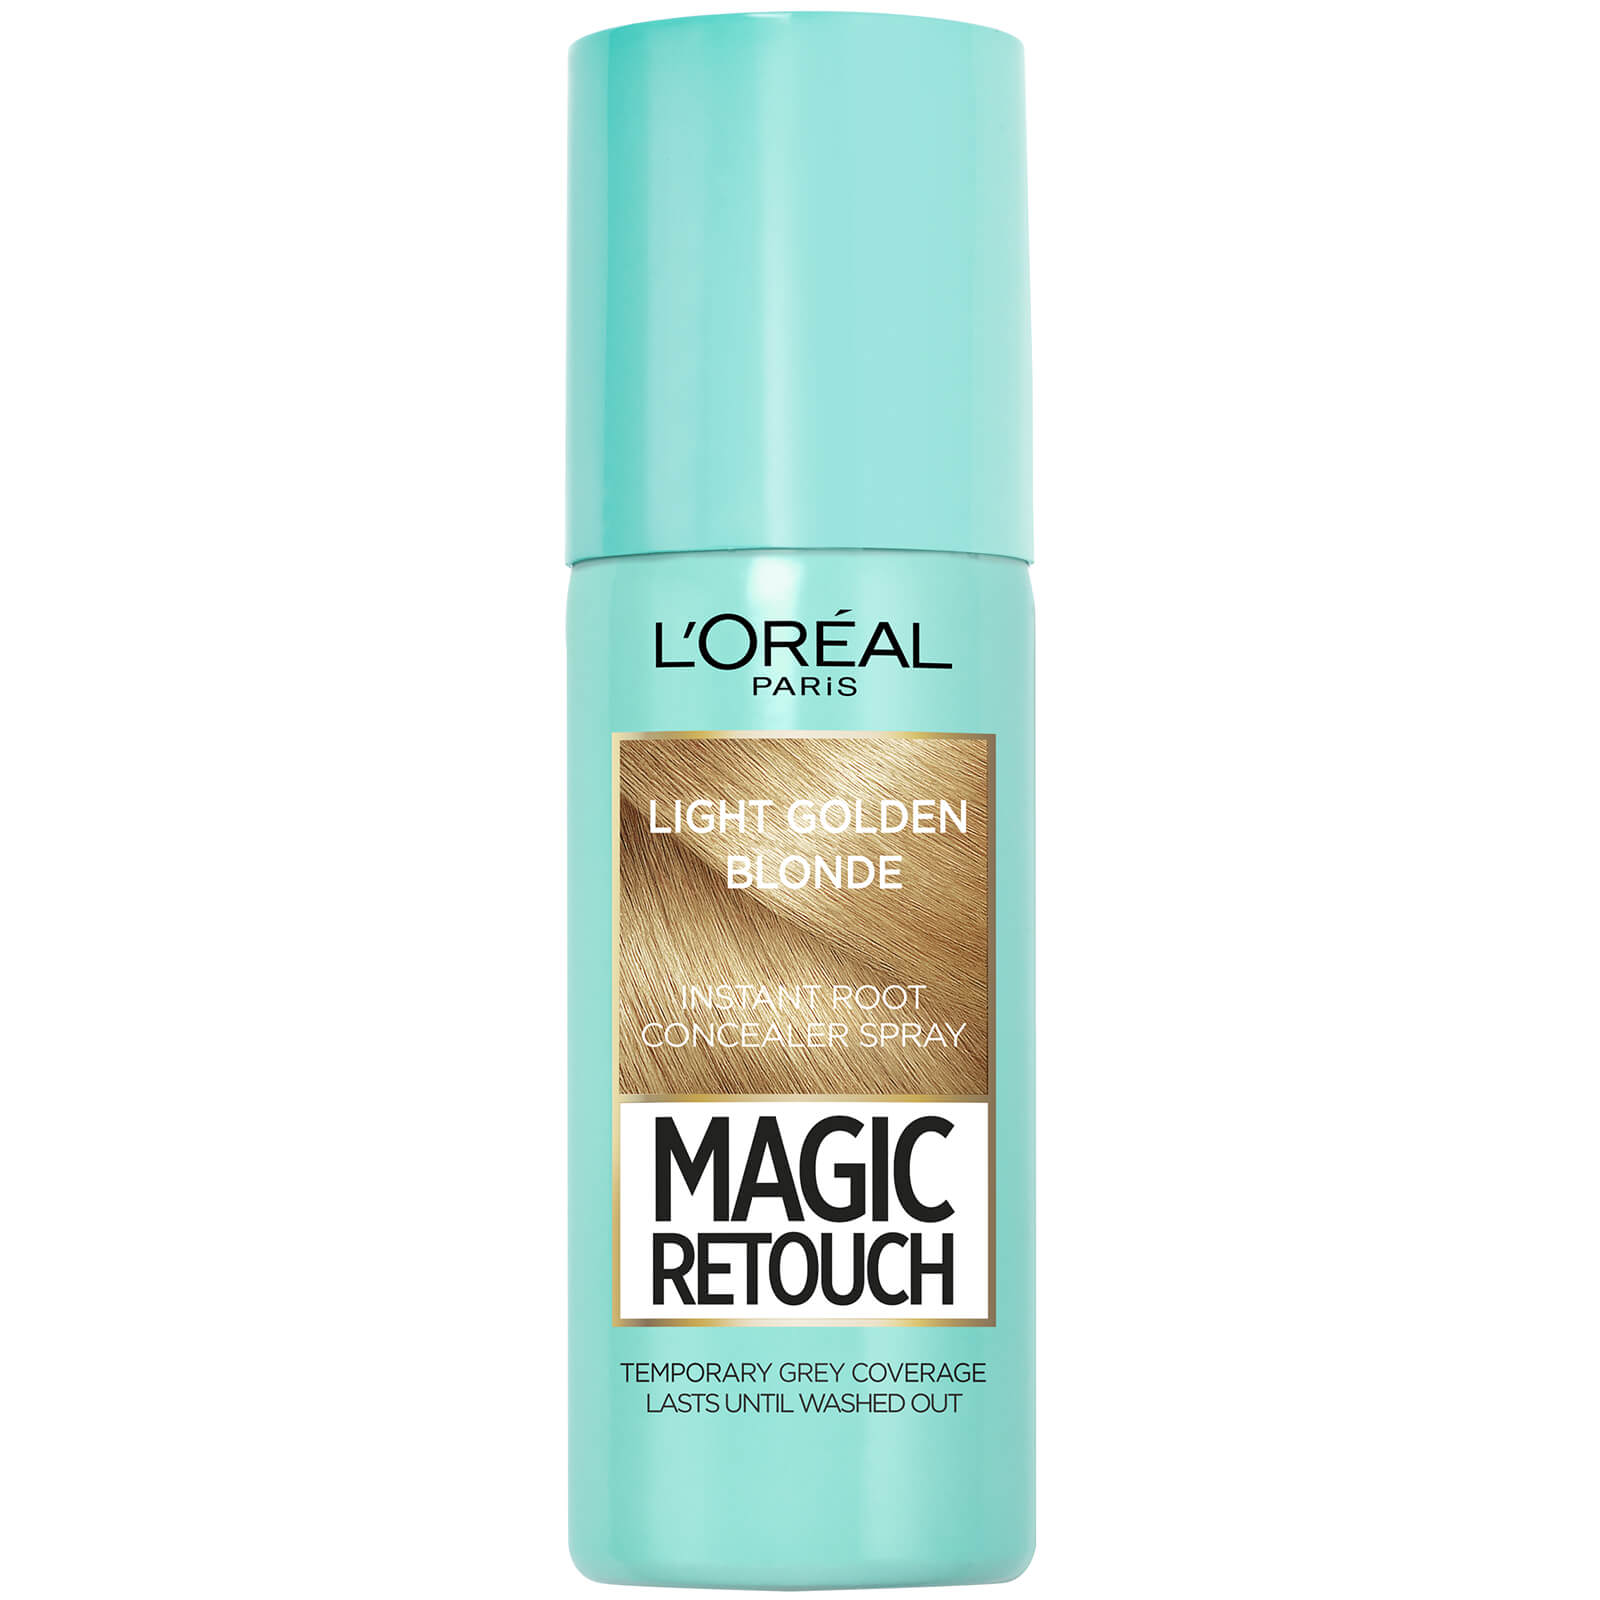 L’Oréal Paris Magic Retouch Temporary Instant Root Concealer Spray 75ml (Various Shades) - Light Golden Blonde